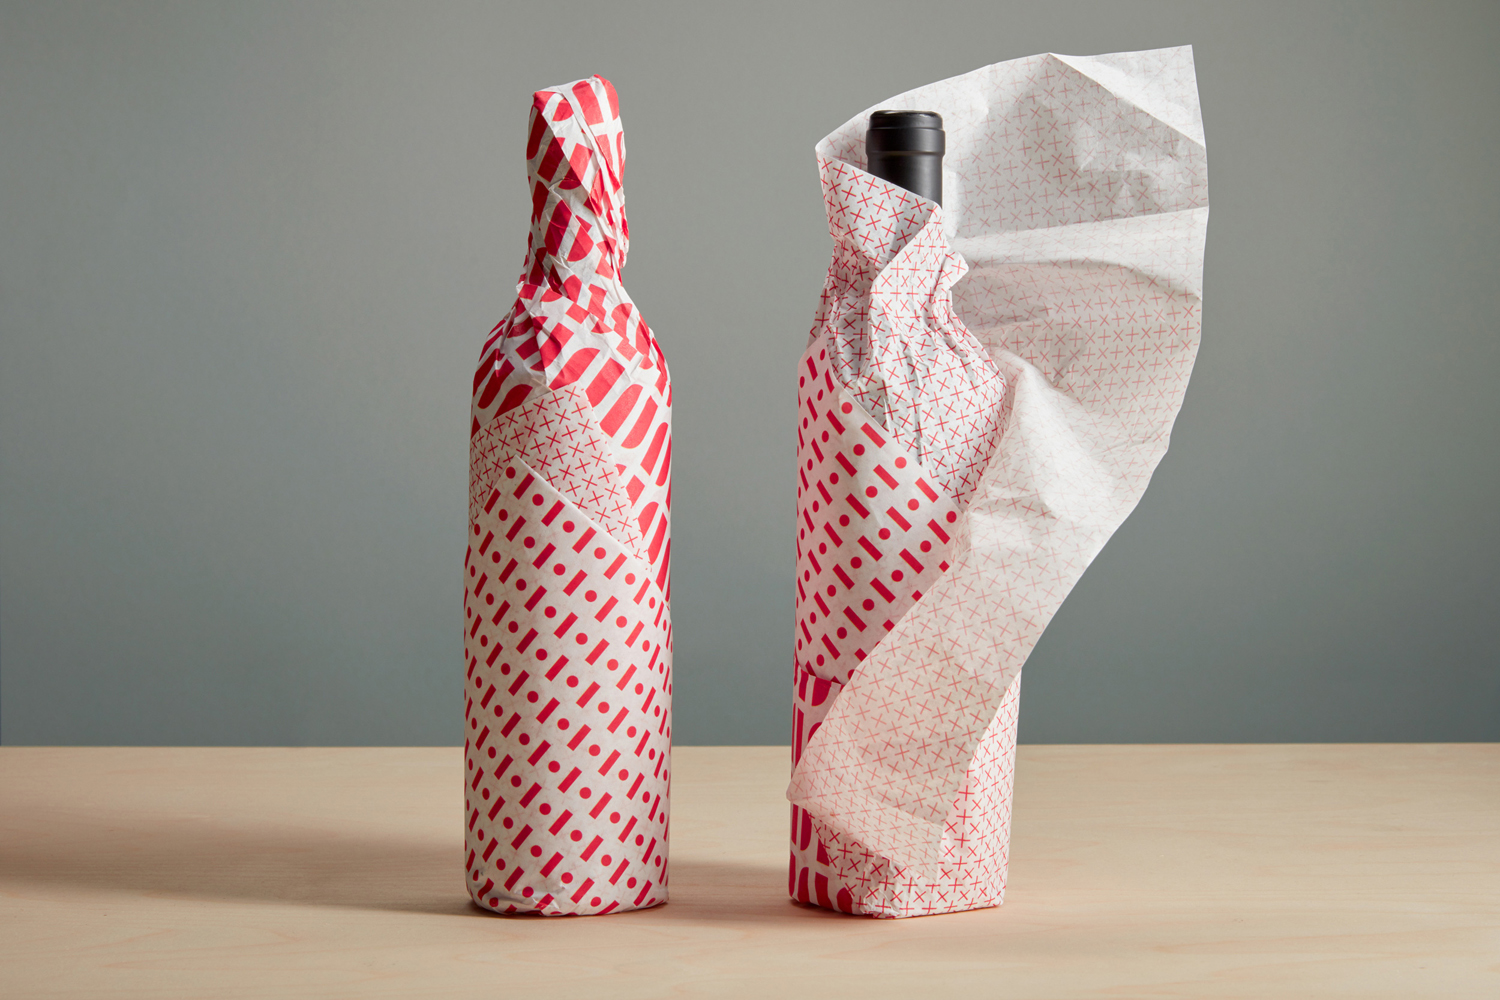 Branded tissue paper designed by London-based studio Spy for catering business H+J